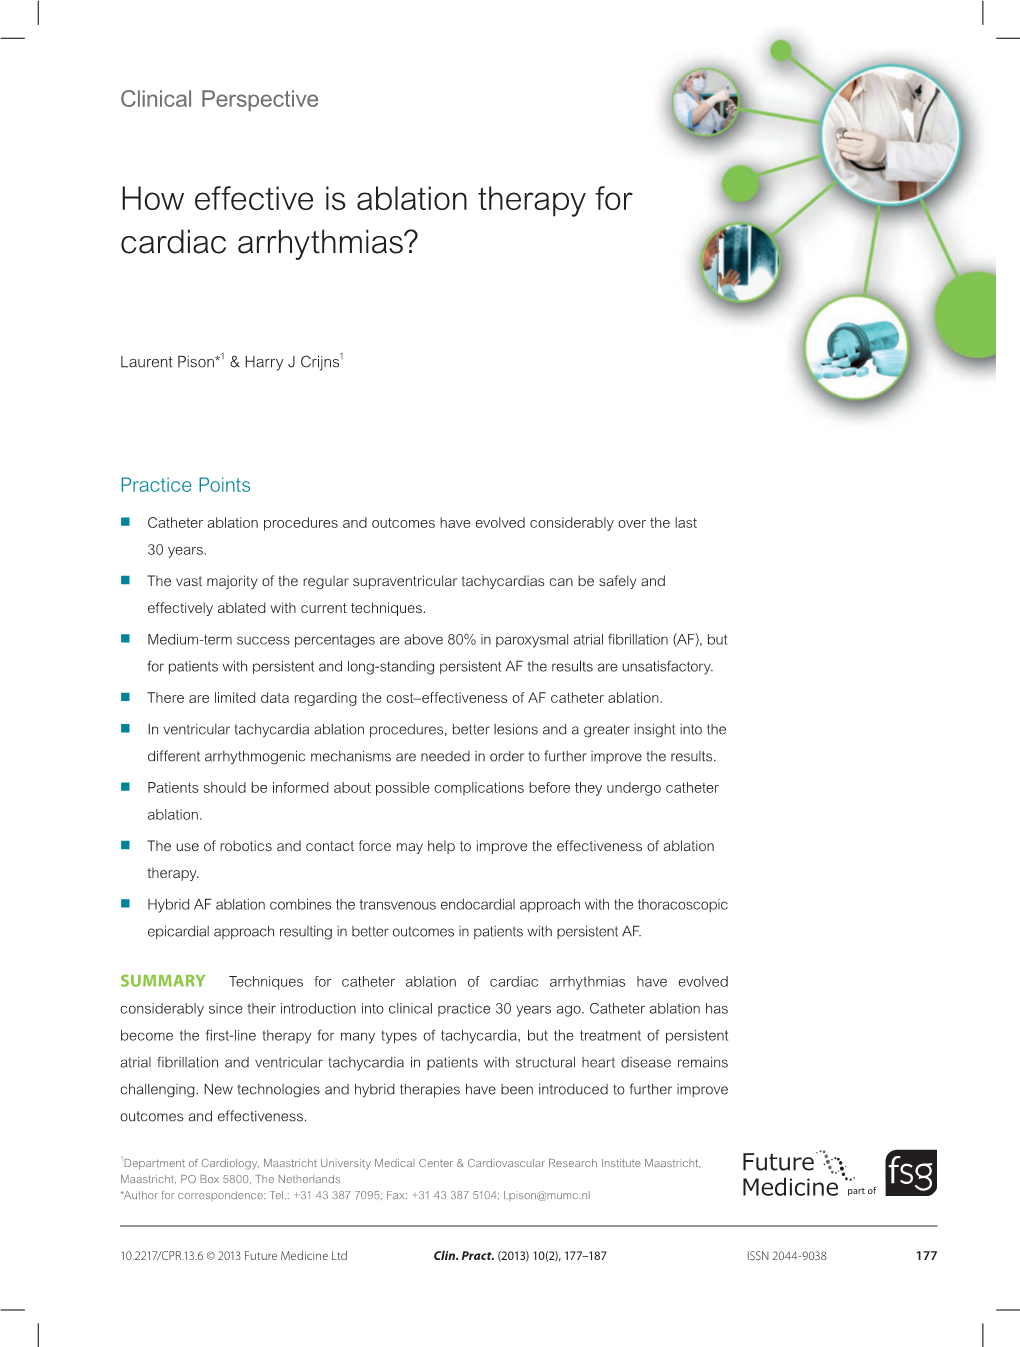 How Effective Is Ablation Therapy for Cardiac Arrhythmias?